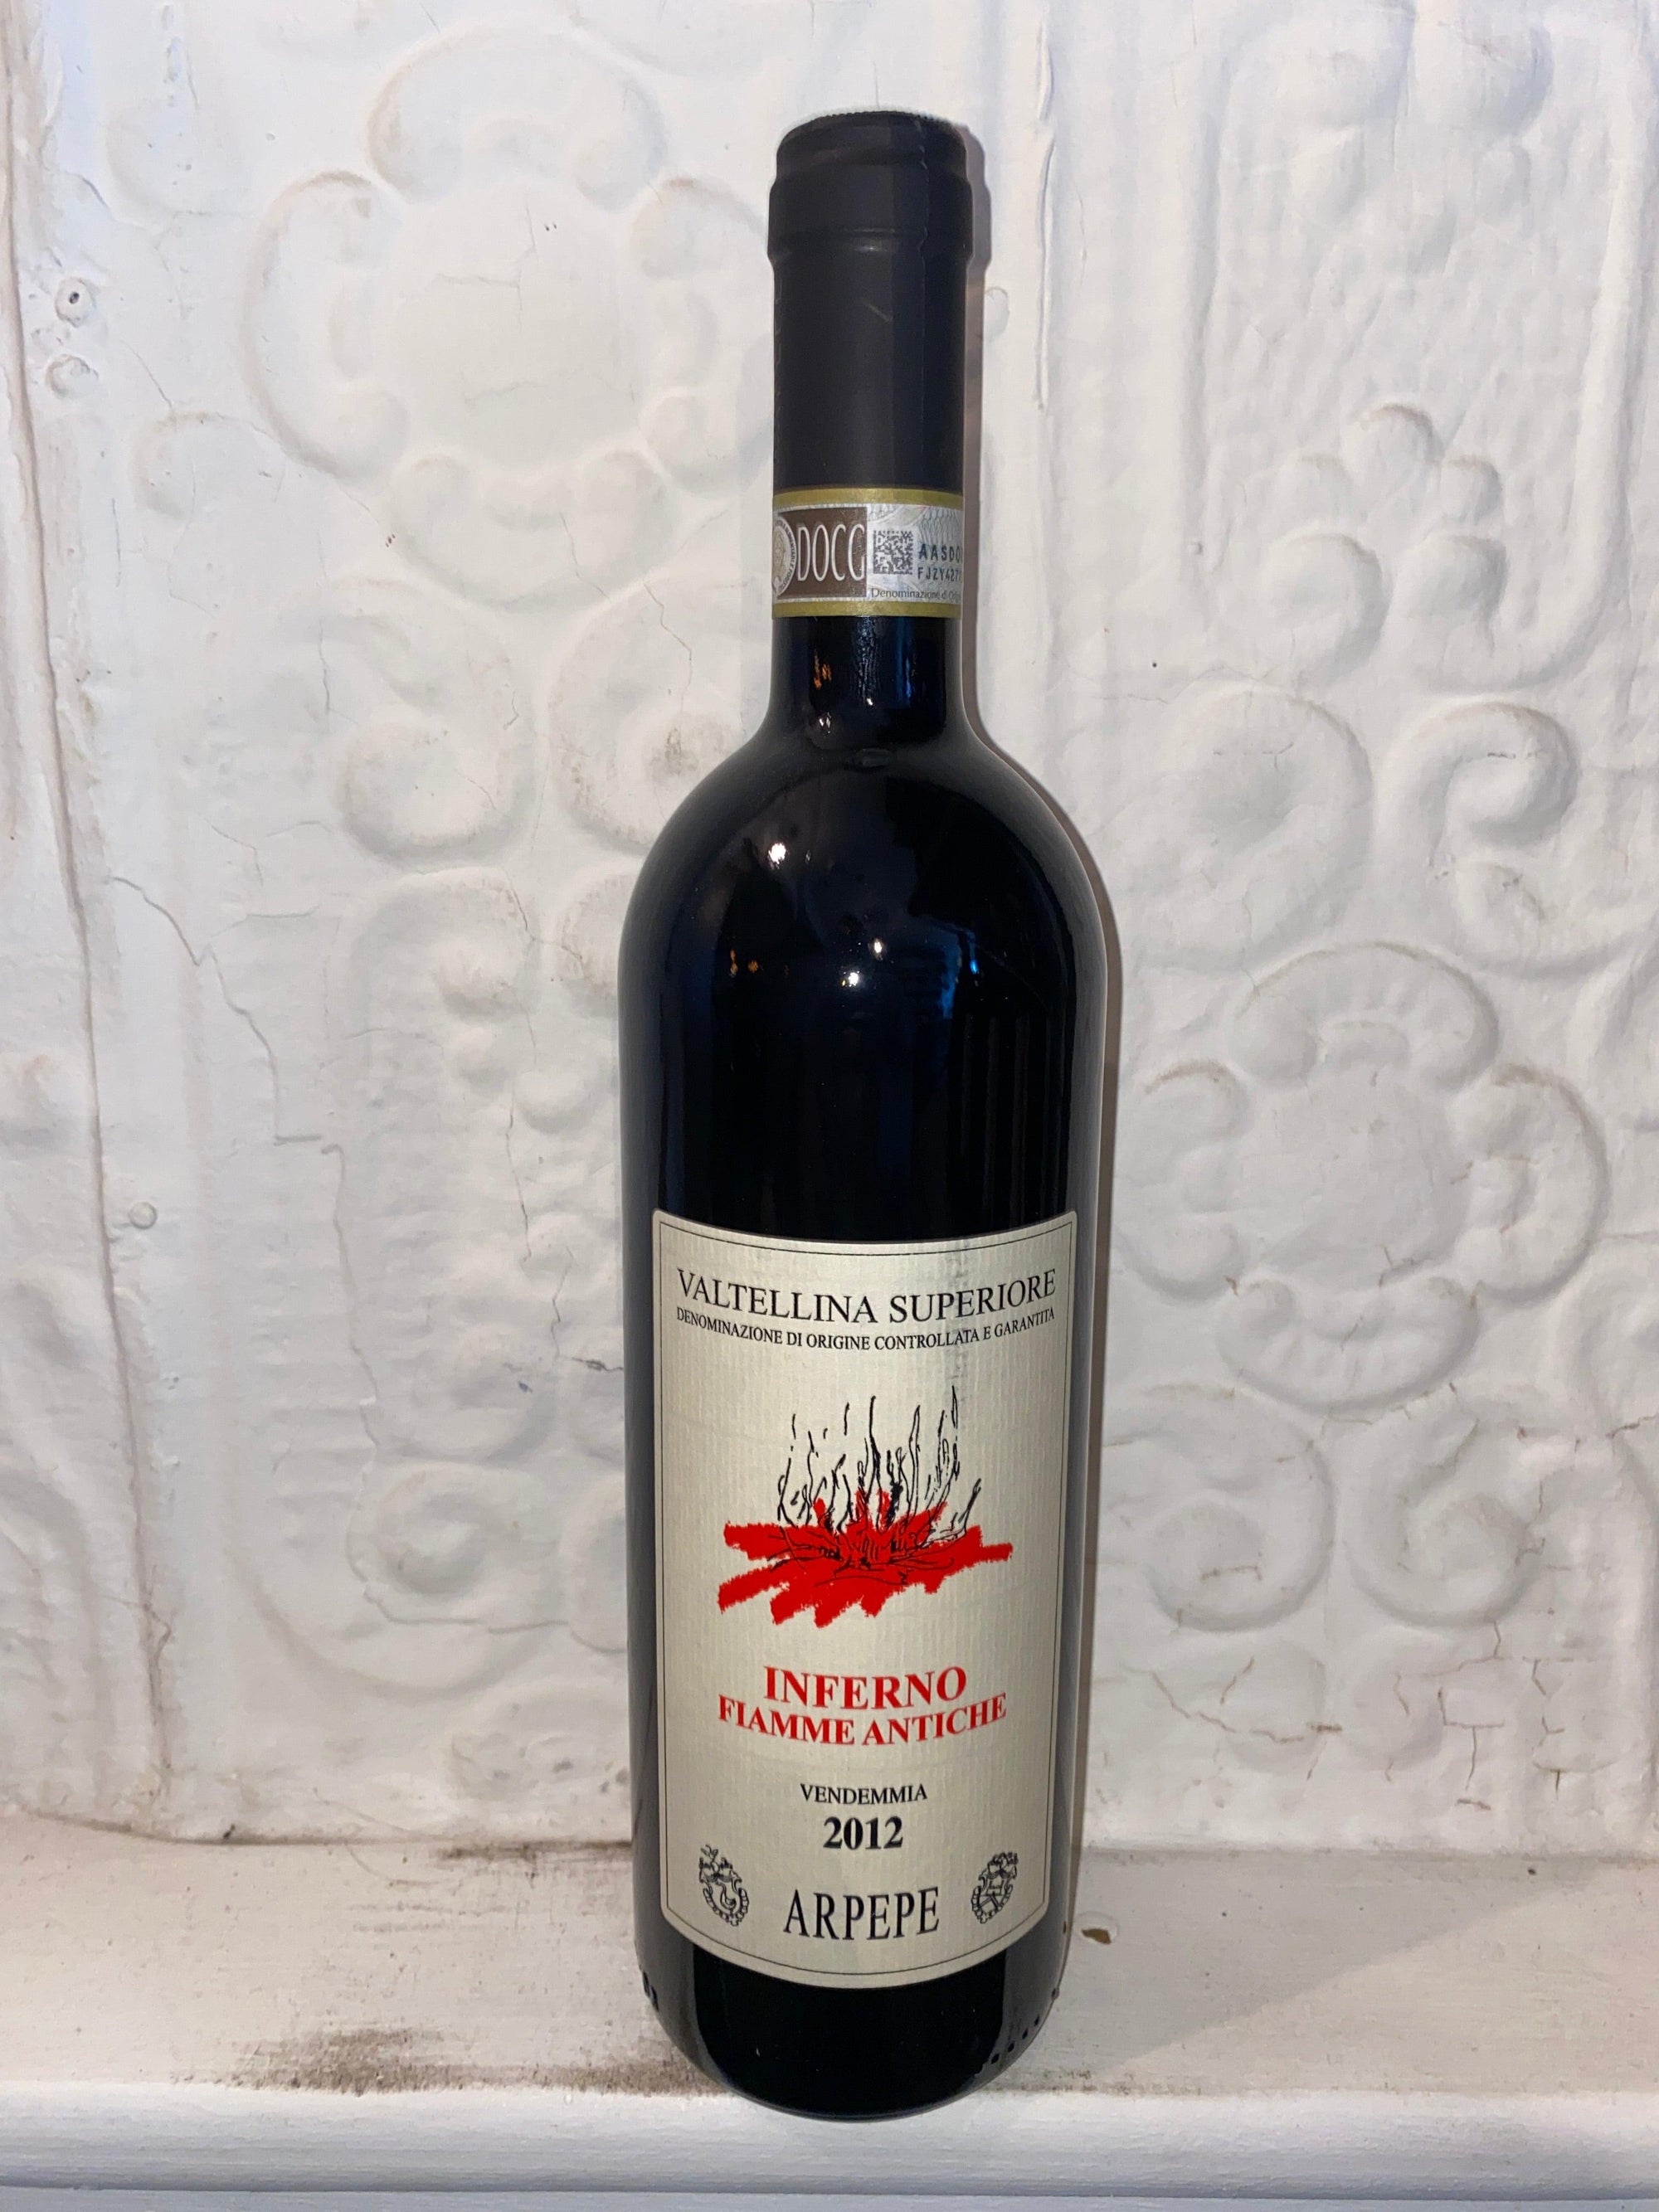 Valtellina Superiore Inferno Fiamme Antiche, Arpepe 2012 (Lombardy, Italy)-Wine-Bibber & Bell